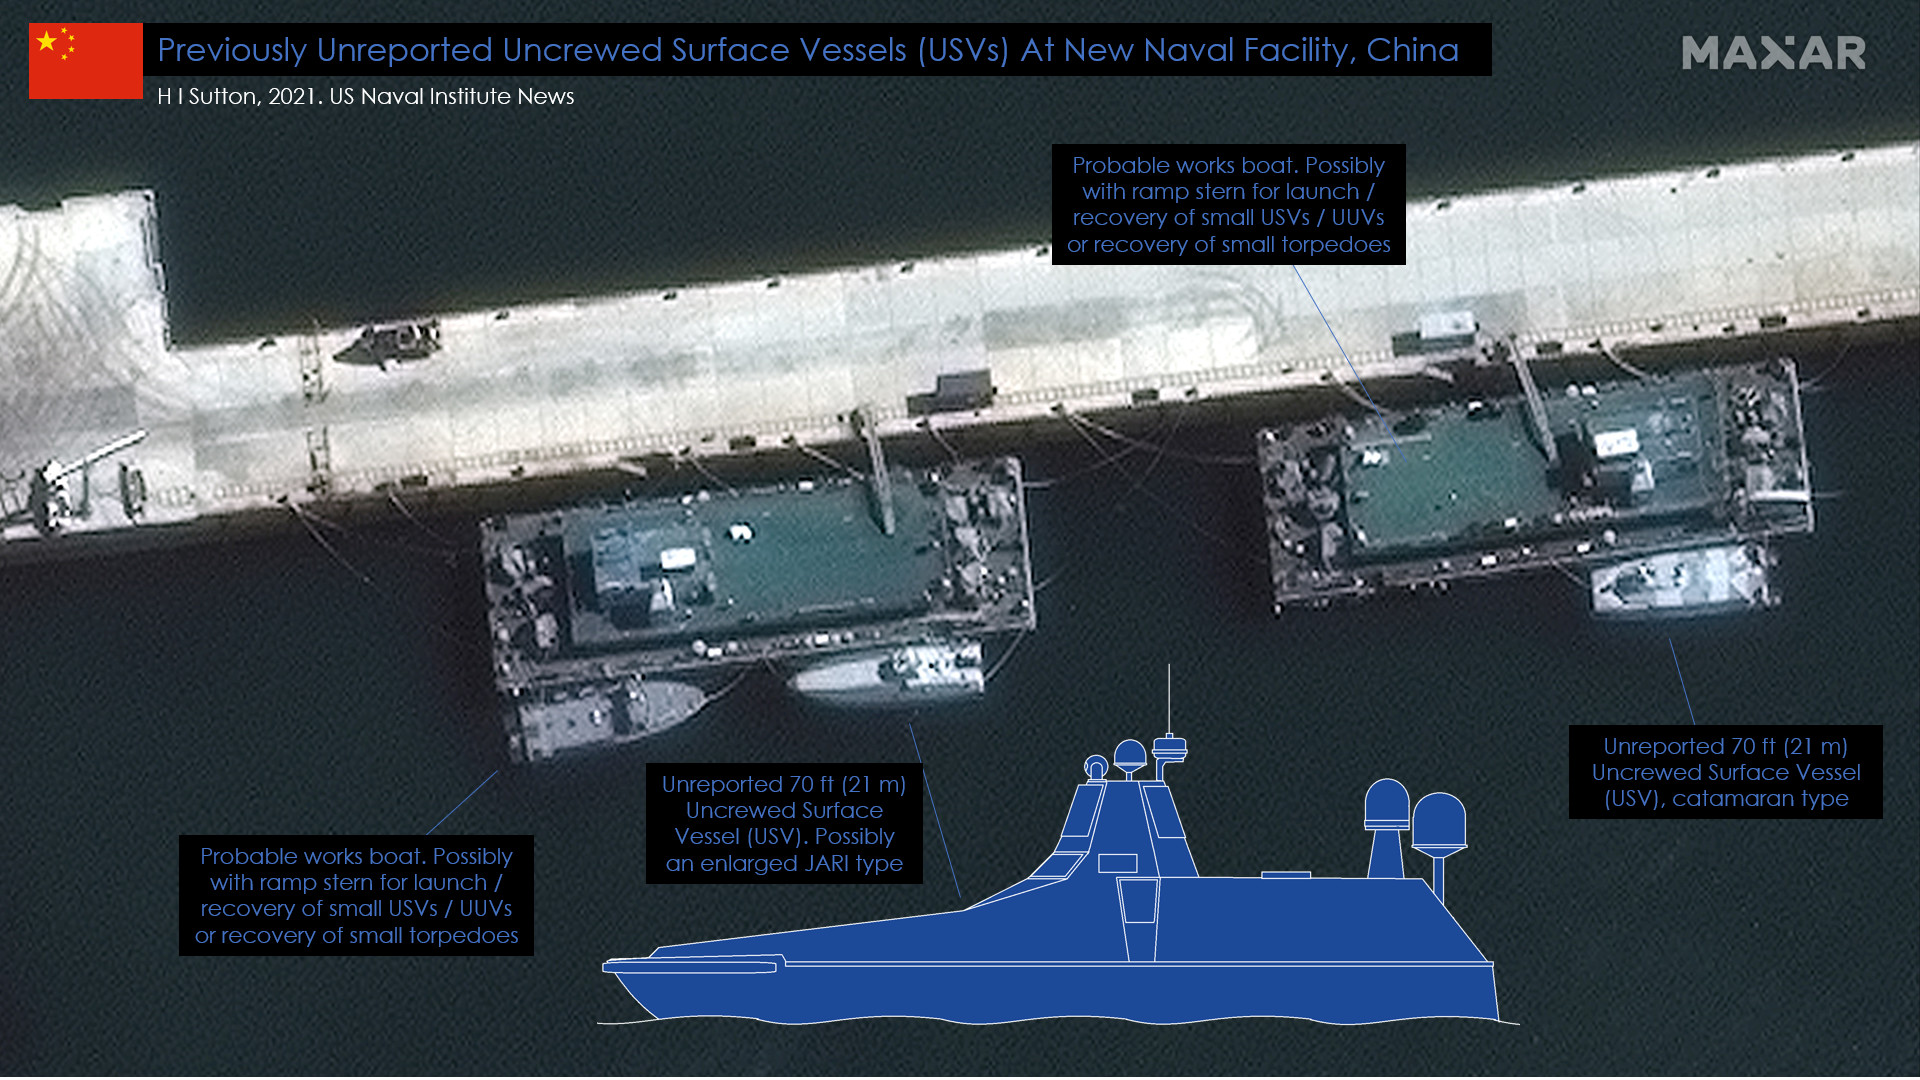 FUERZAS ARMADAS DE CHINA - Página 5 China-Navy-New-Base-Unreported-USVs